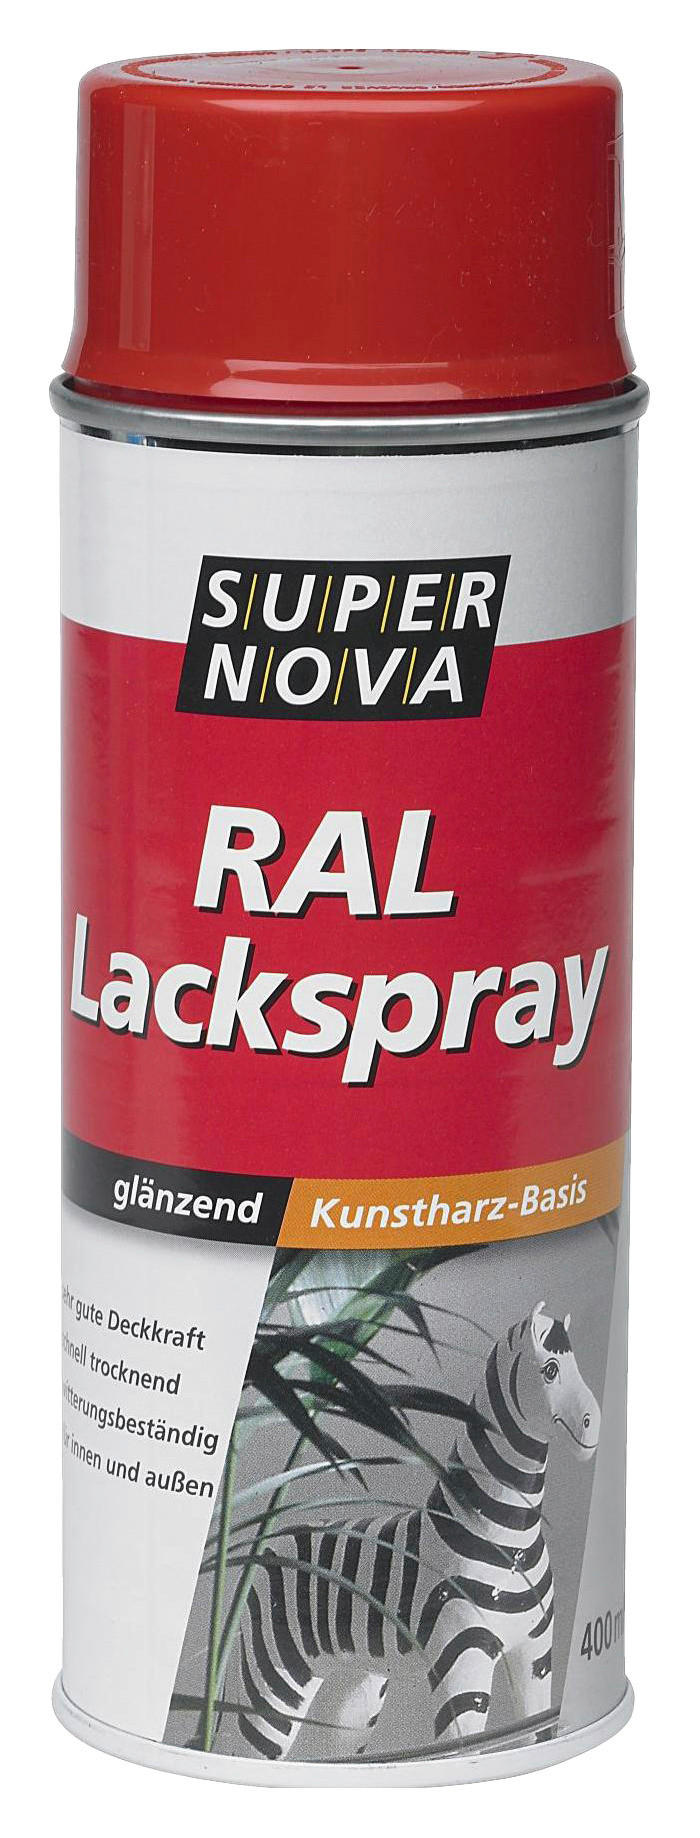 Super-Nova Lackspray feuerrot glänzend ca. 0,4 l Lackspray 400ml - feuerrot (400ml)